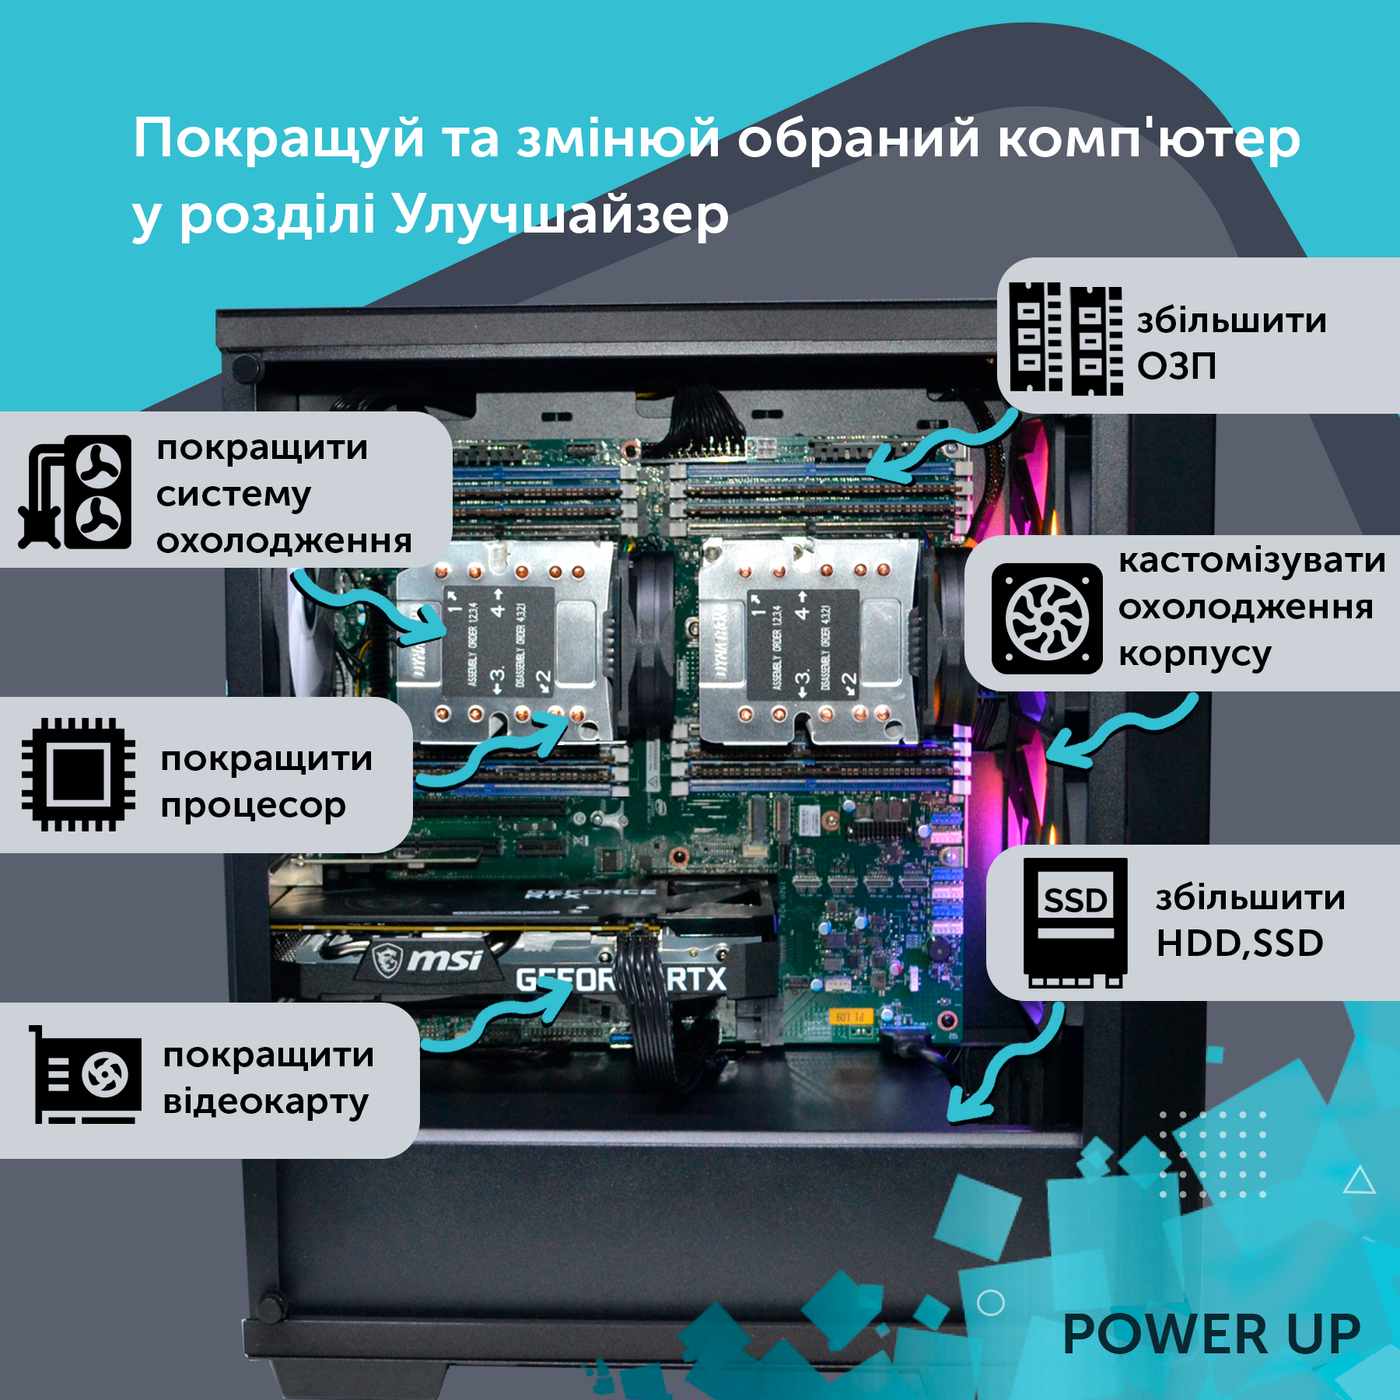 Рабочая станция PowerUp Desktop #153 Ryzen 9 5950x/32 GB/SSD 512GB/GeForce GTX 1650 4GB